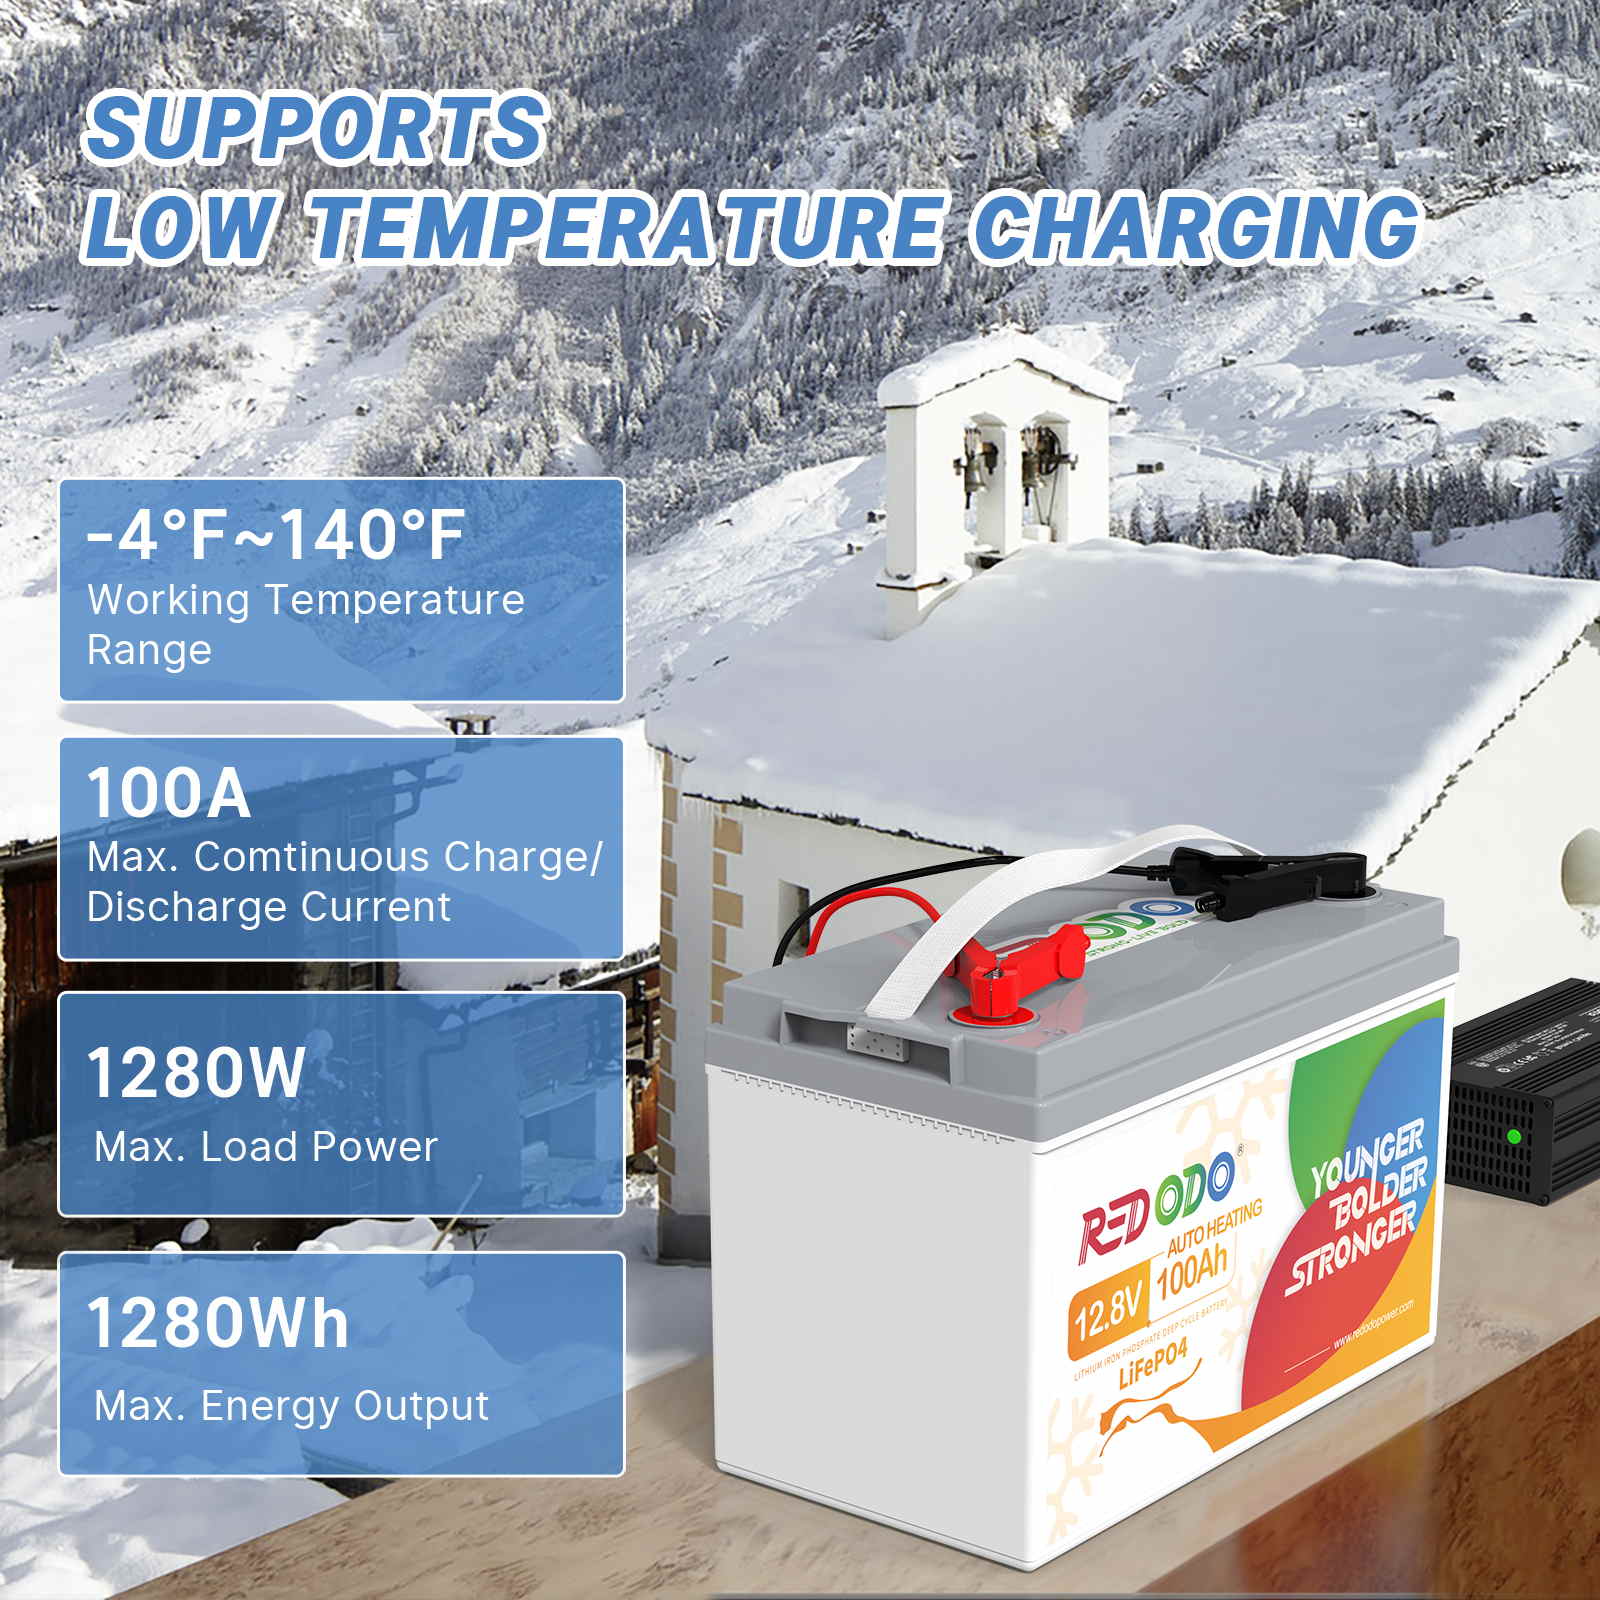 Very-good【Self-Heating】Redodo 12V 100Ah LiFePO4 Battery